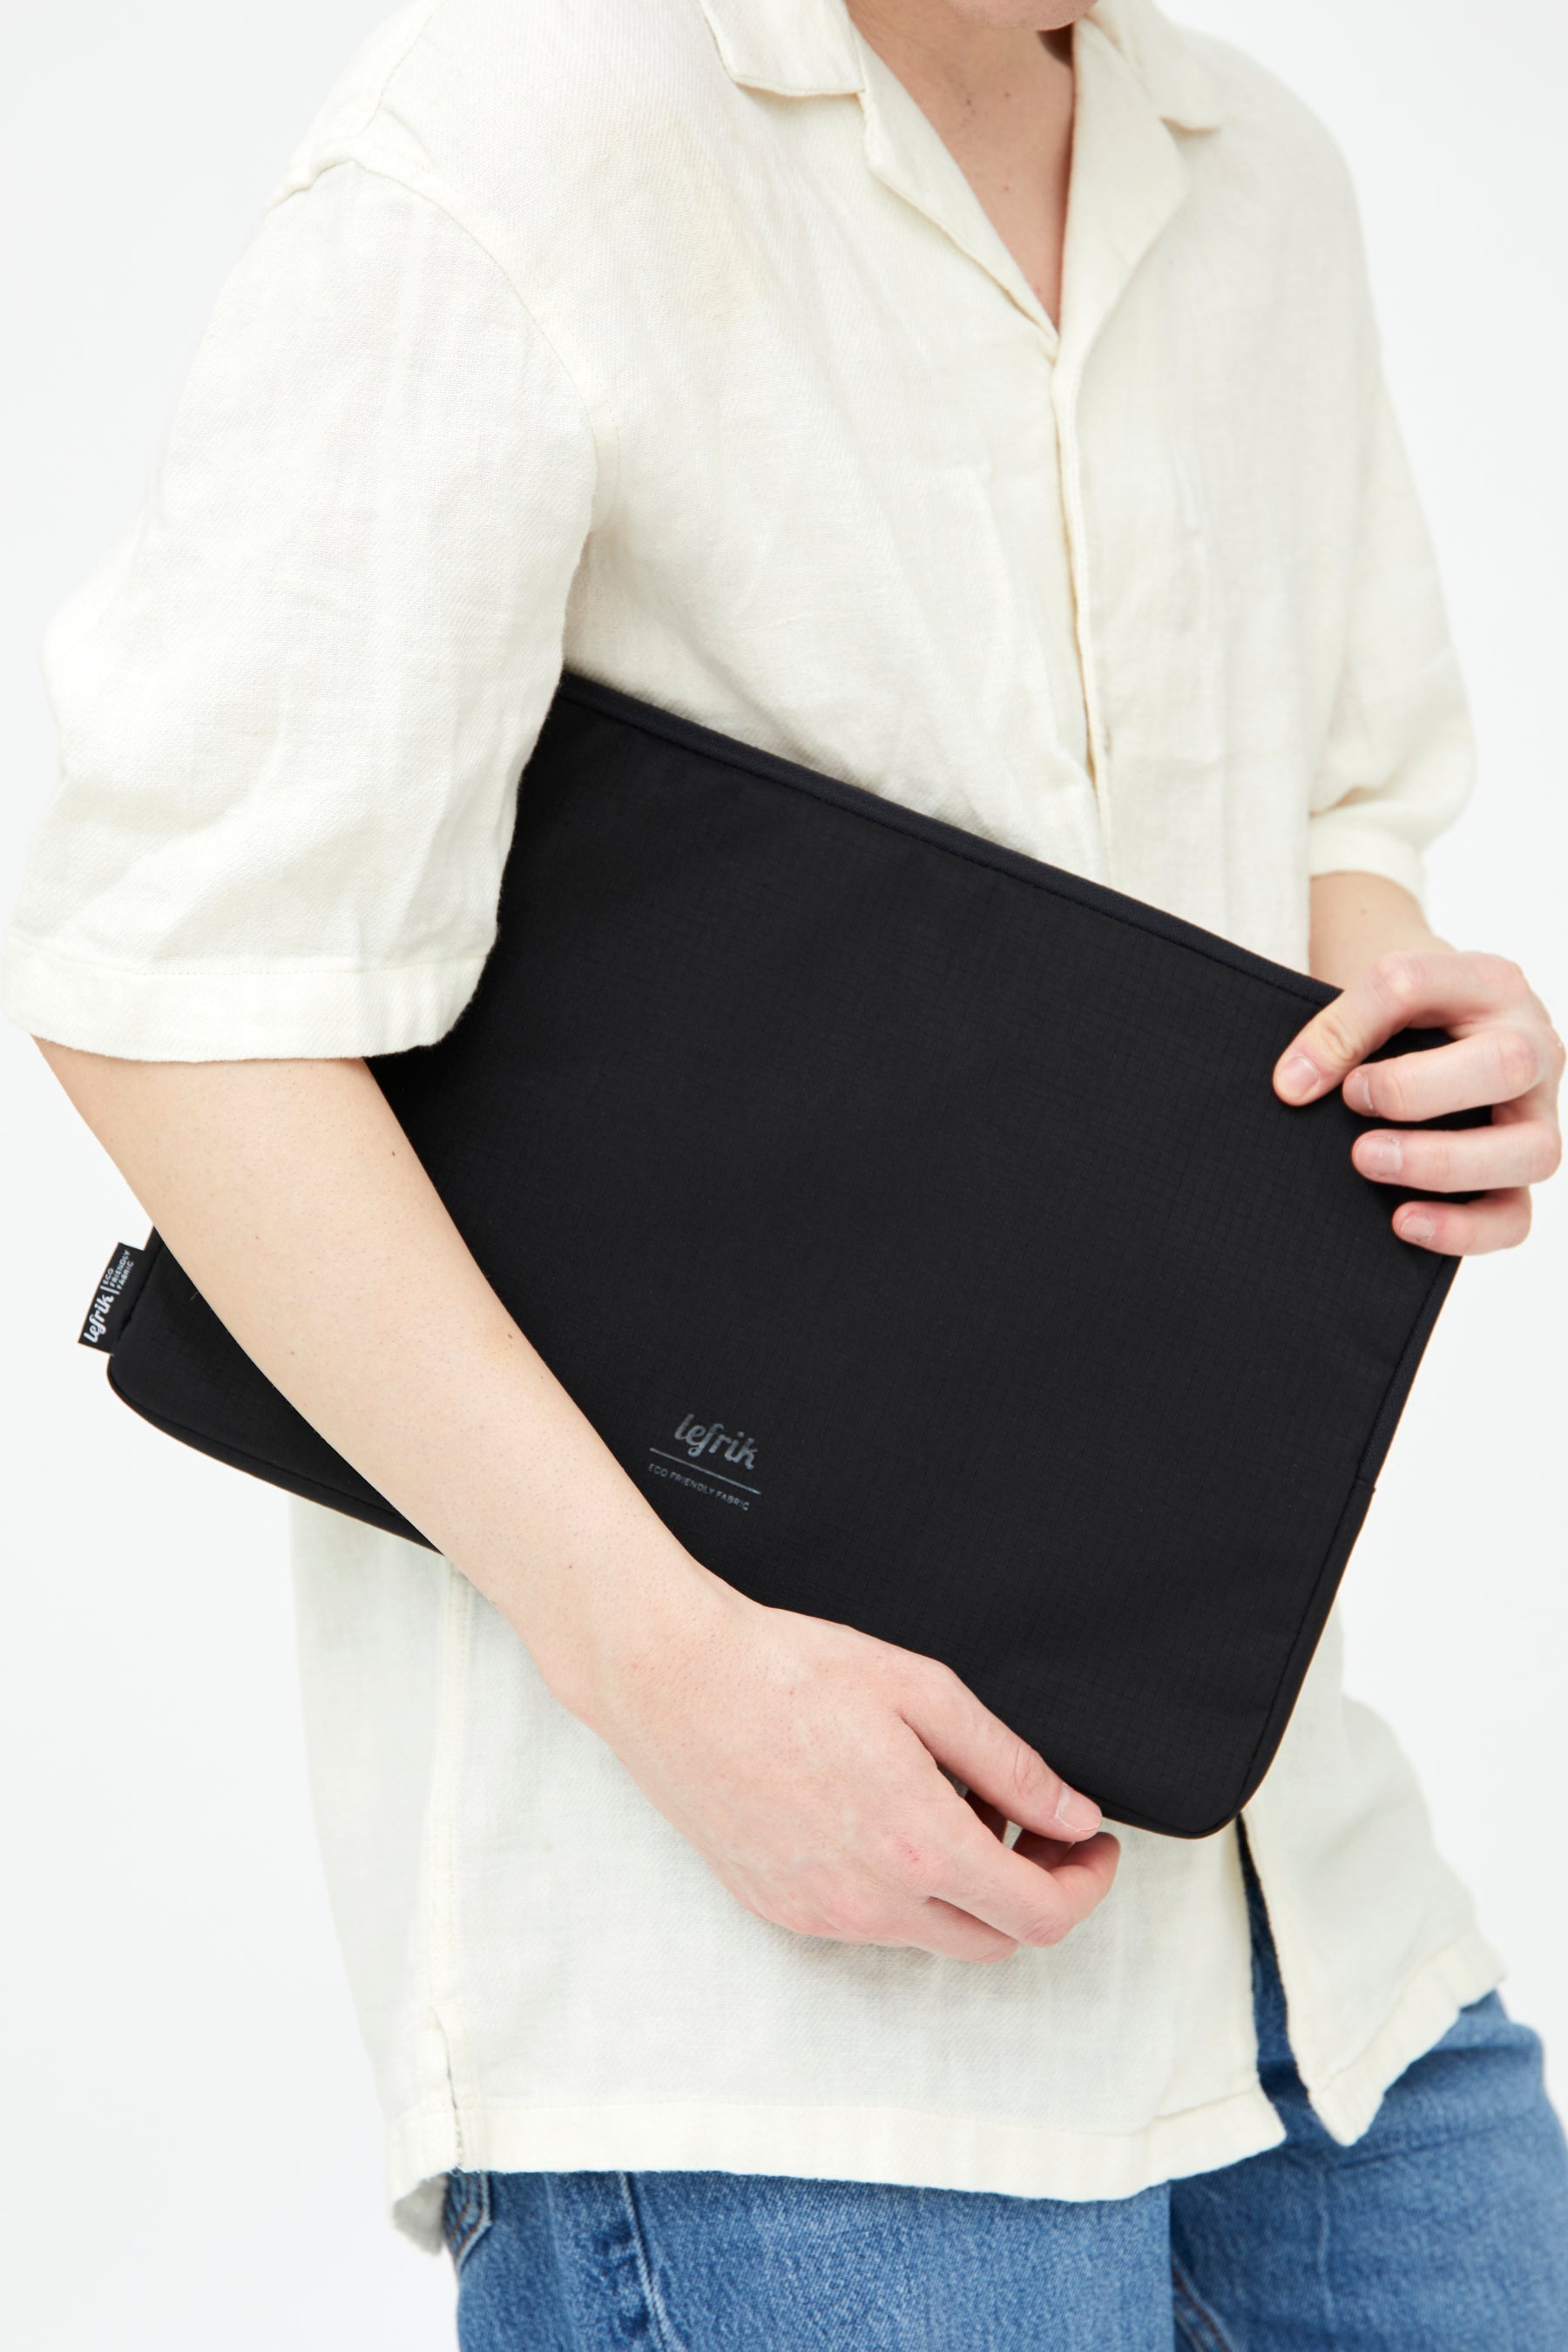 Black Capture Sage Vandra laptop bag made from recycled PET from Lefrik